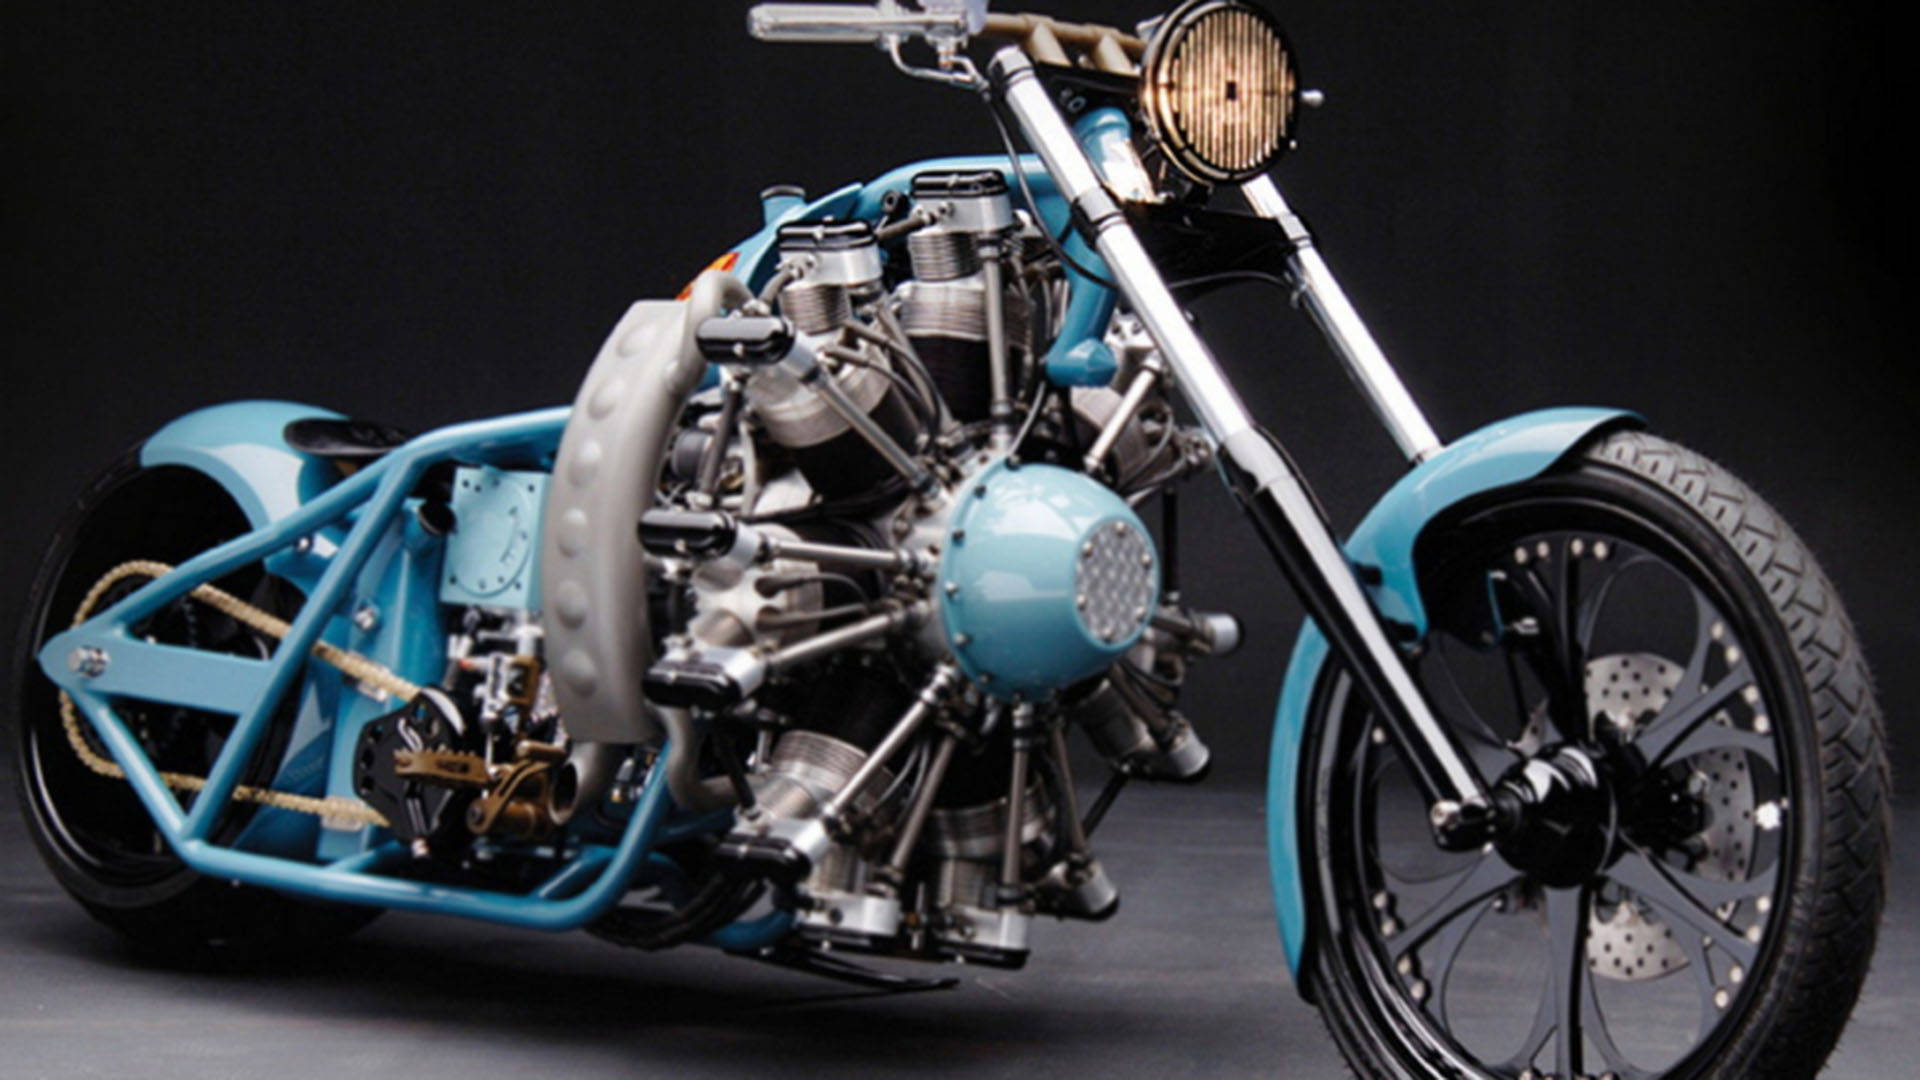 West Coast Choppers Motorcycle Engine